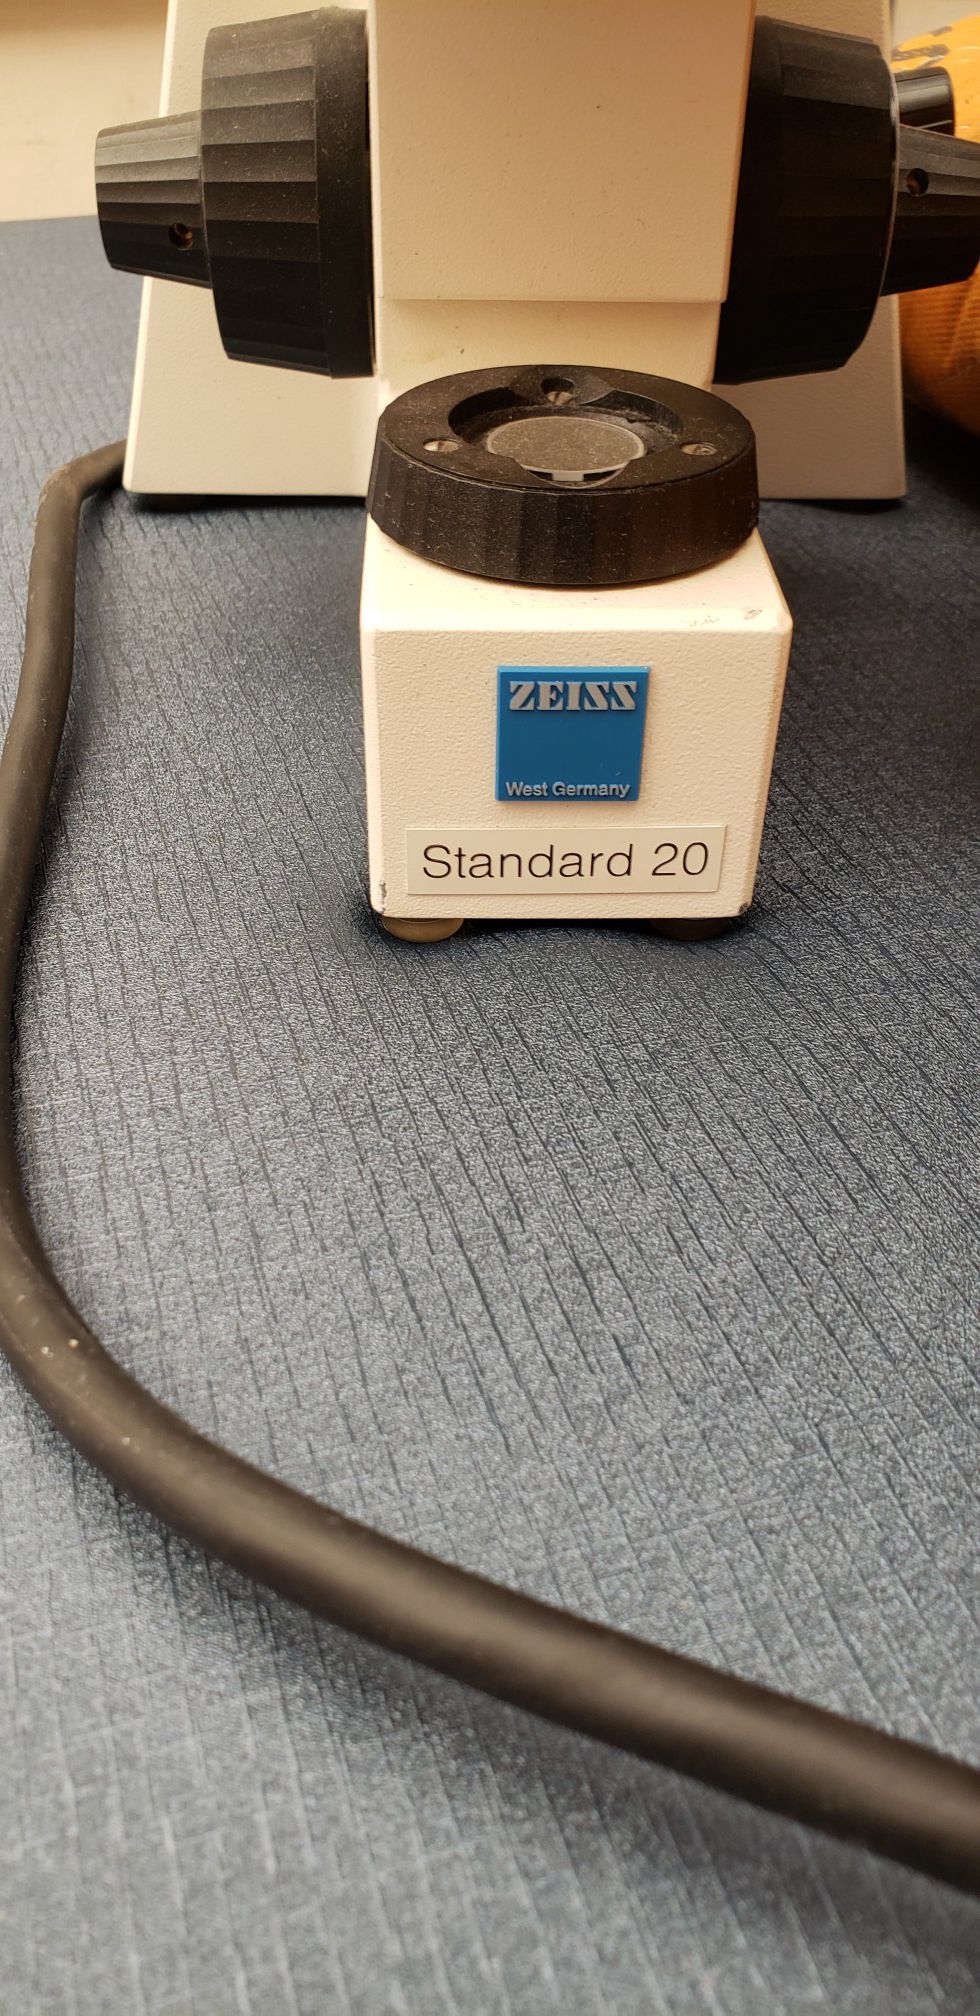 Zeiss standard 20 microscope